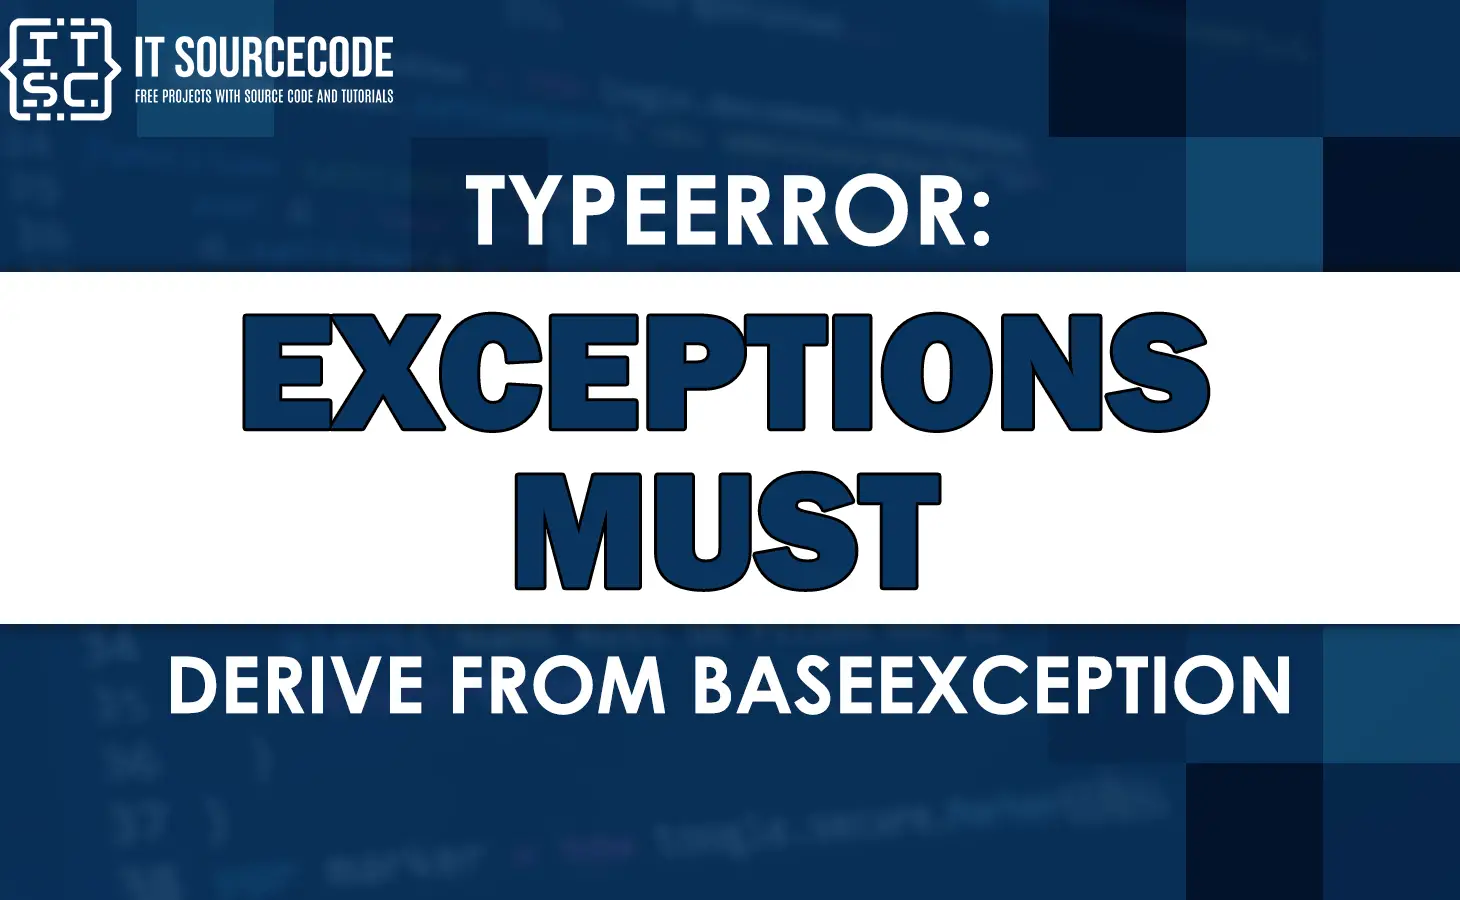 typeerror: exceptions must derive from baseexception - Fix Quickly